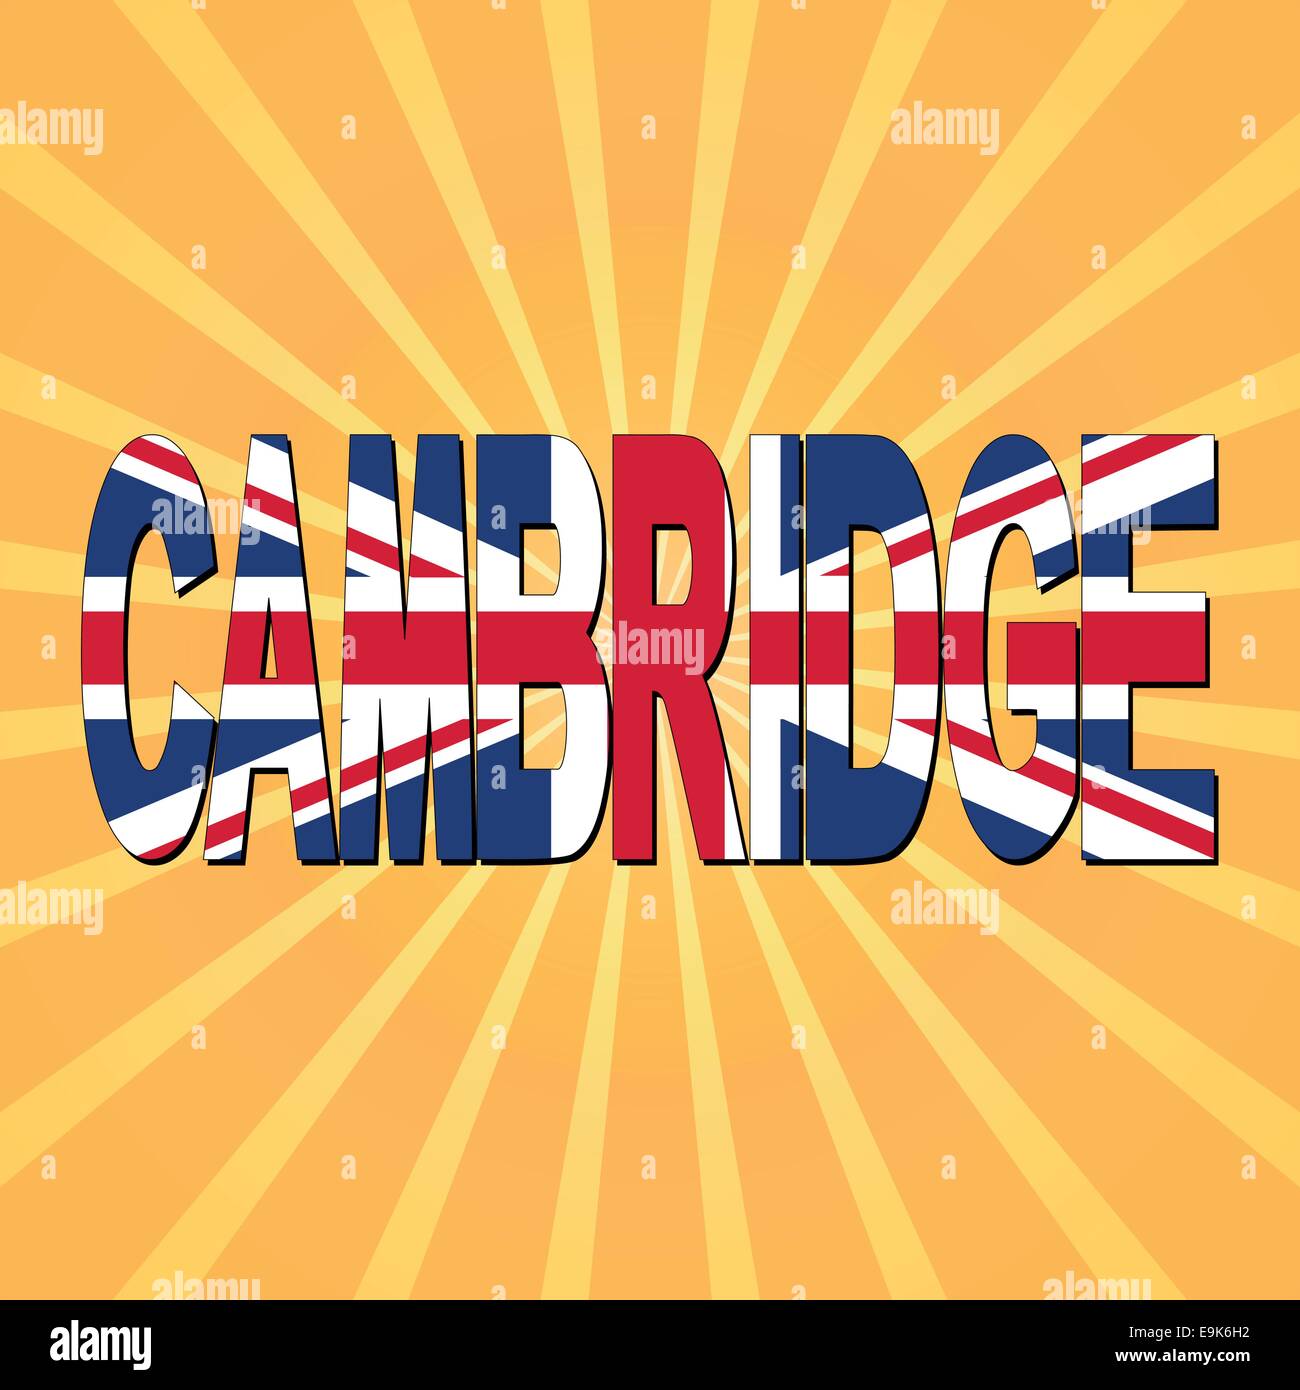 Cambridge flag text with sunburst illustration Stock Vector